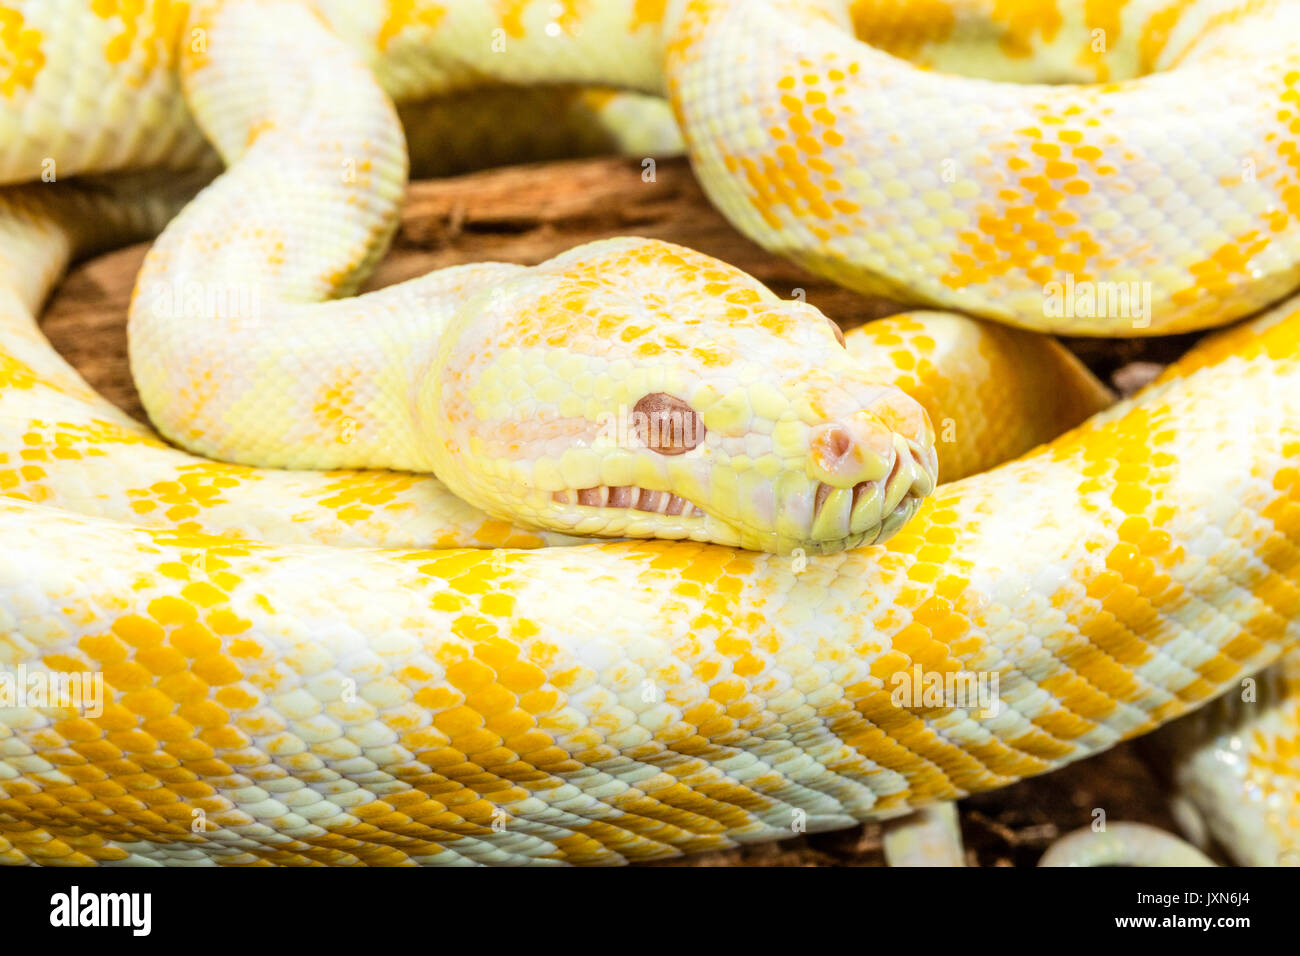 Yellow and white striped Darwin Albino Carpet Python coiled on tree root. Medium close up Stock Photo